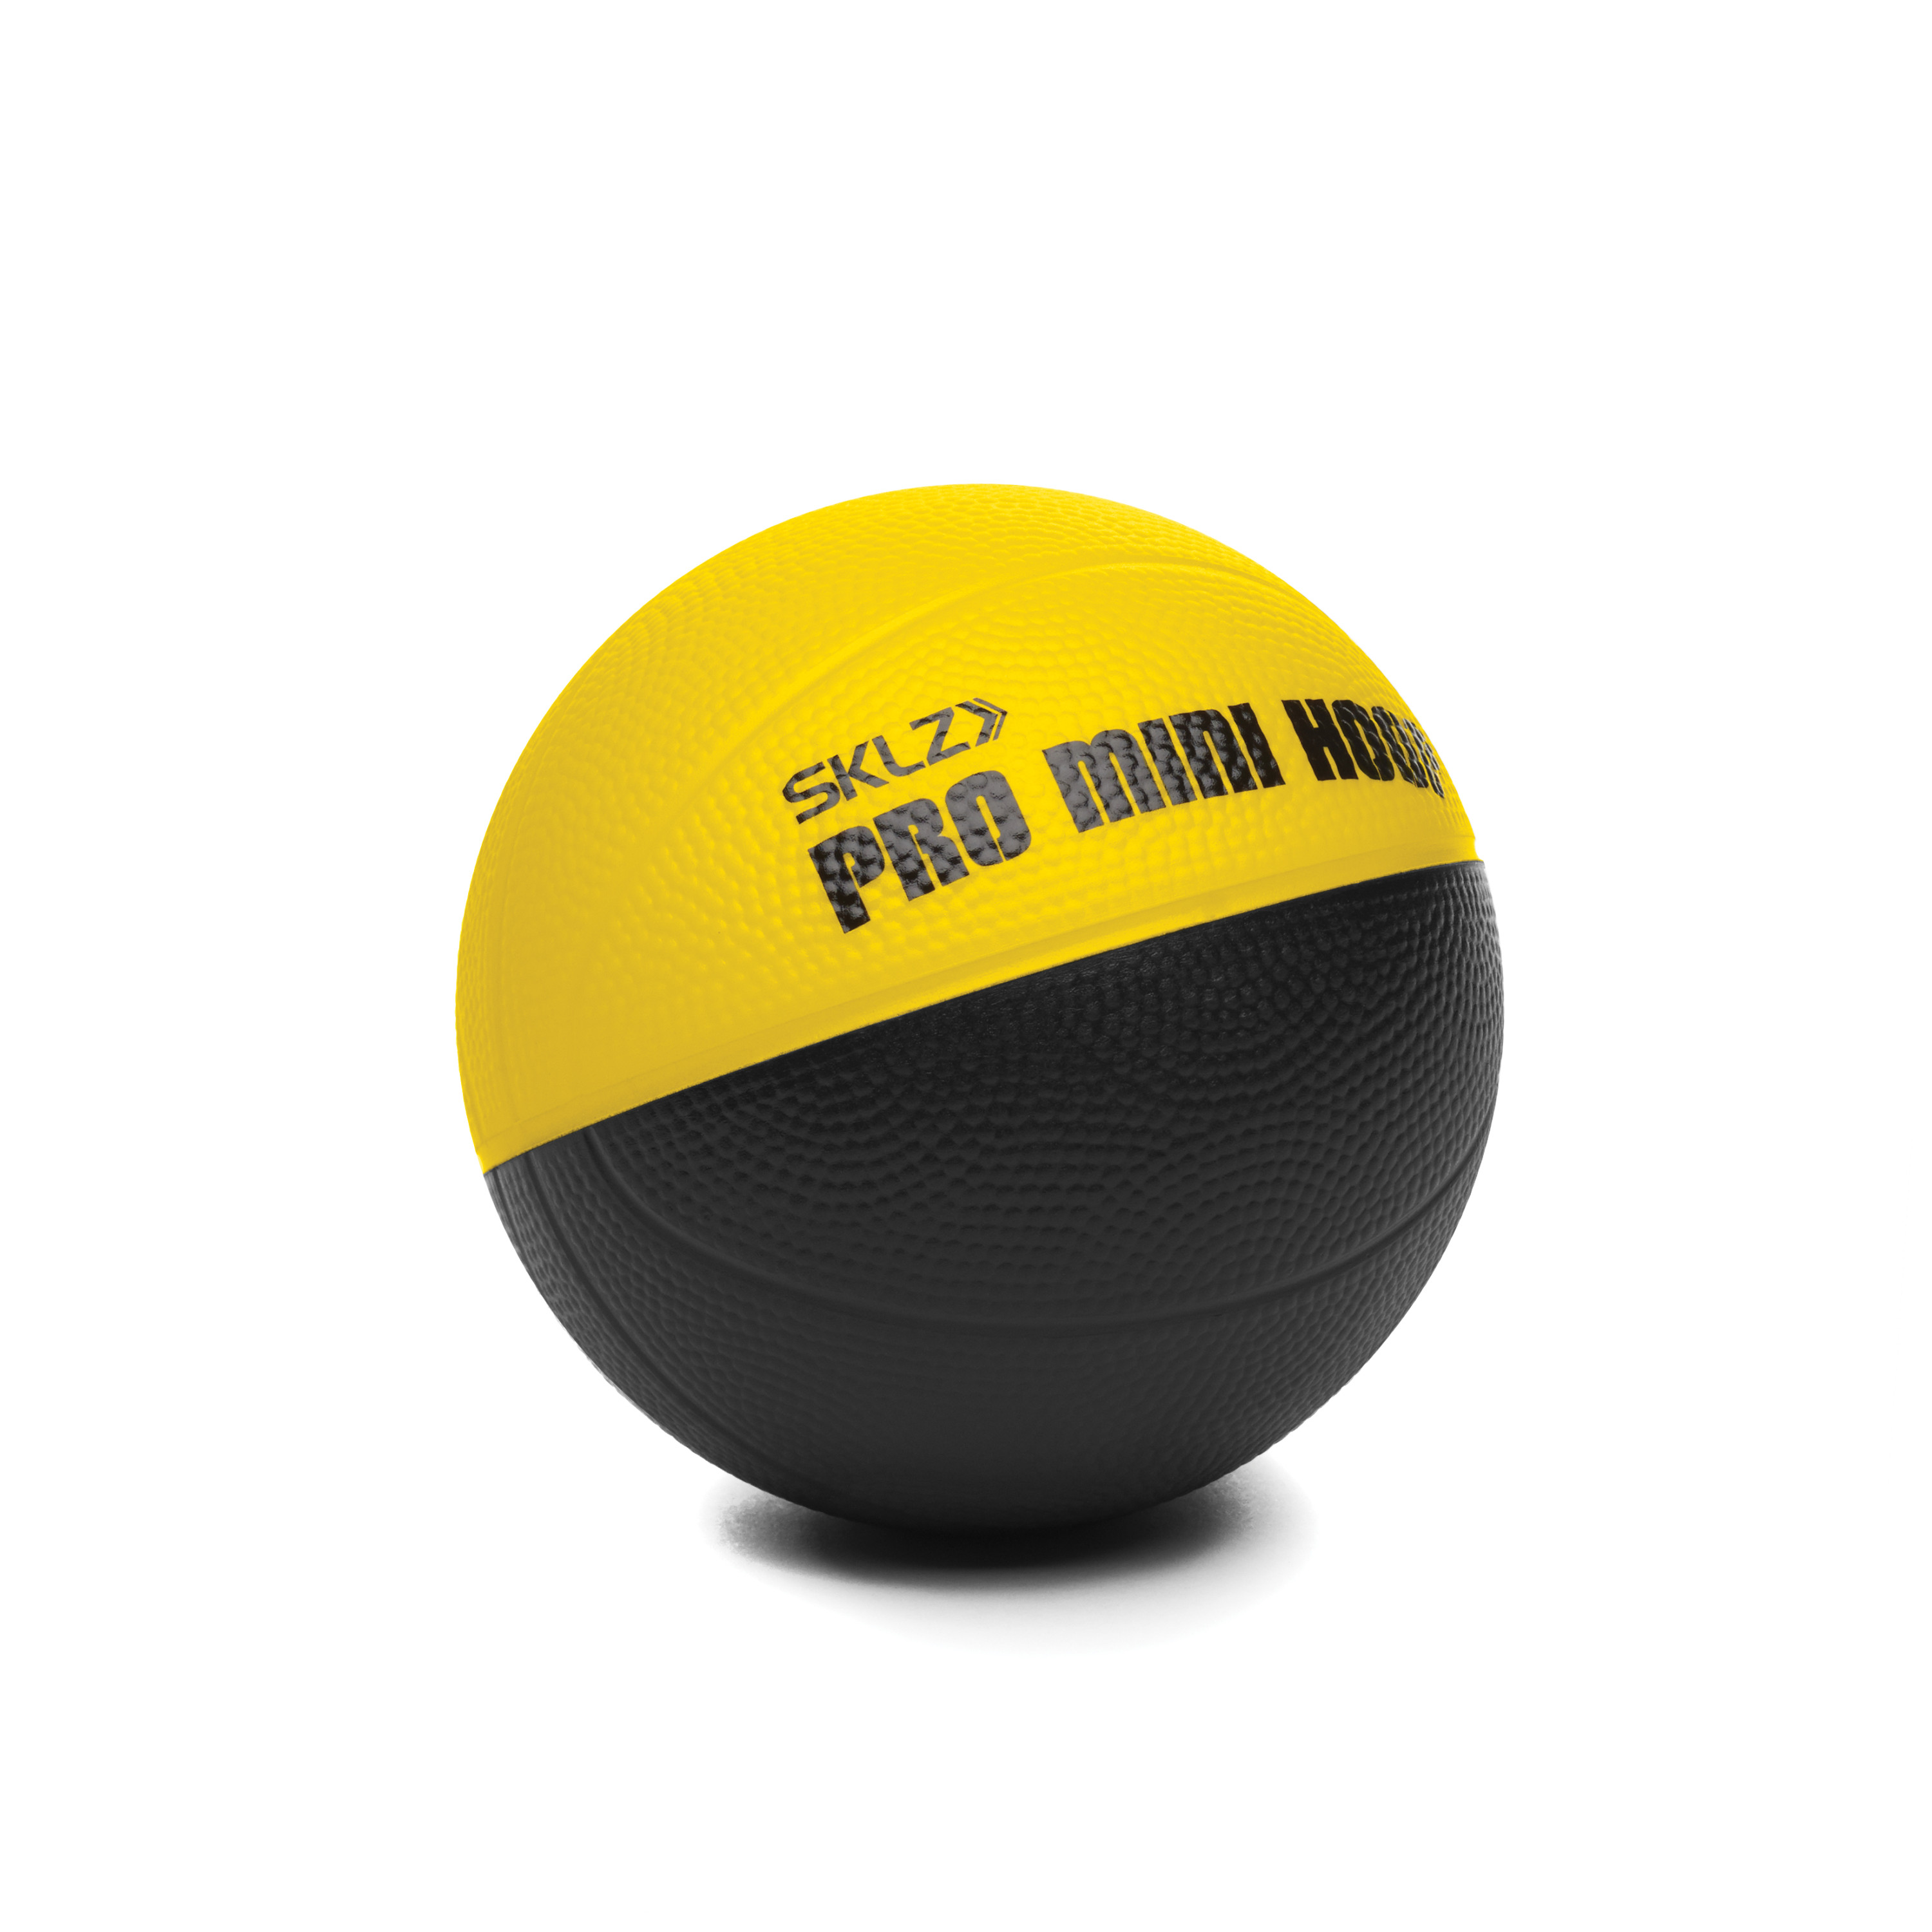 SKLZ Pro Mini Micro Hoop with Foam Ball, 15"x10" - image 3 of 8